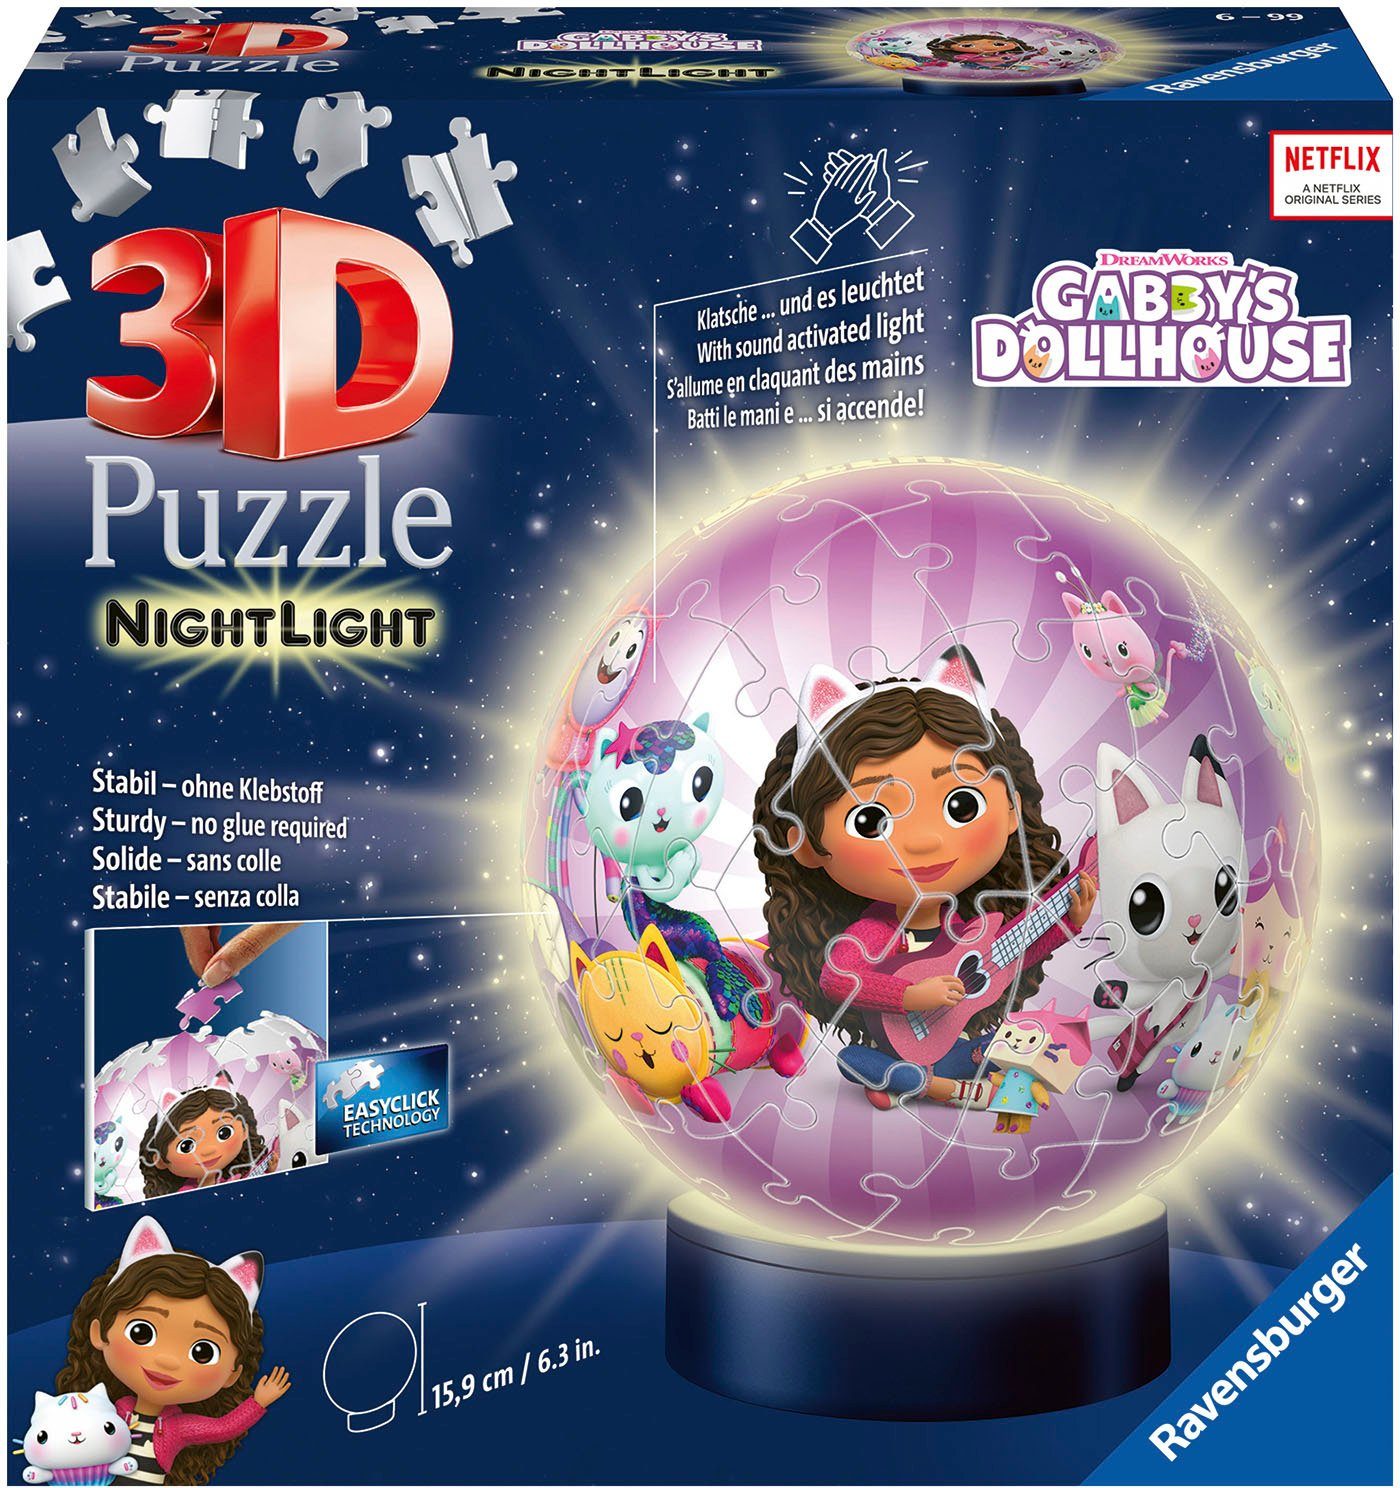 Puzzleteile, Dollhouse, Gabby's Ravensburger in 72 Puzzleball Nachtlicht Europe Made